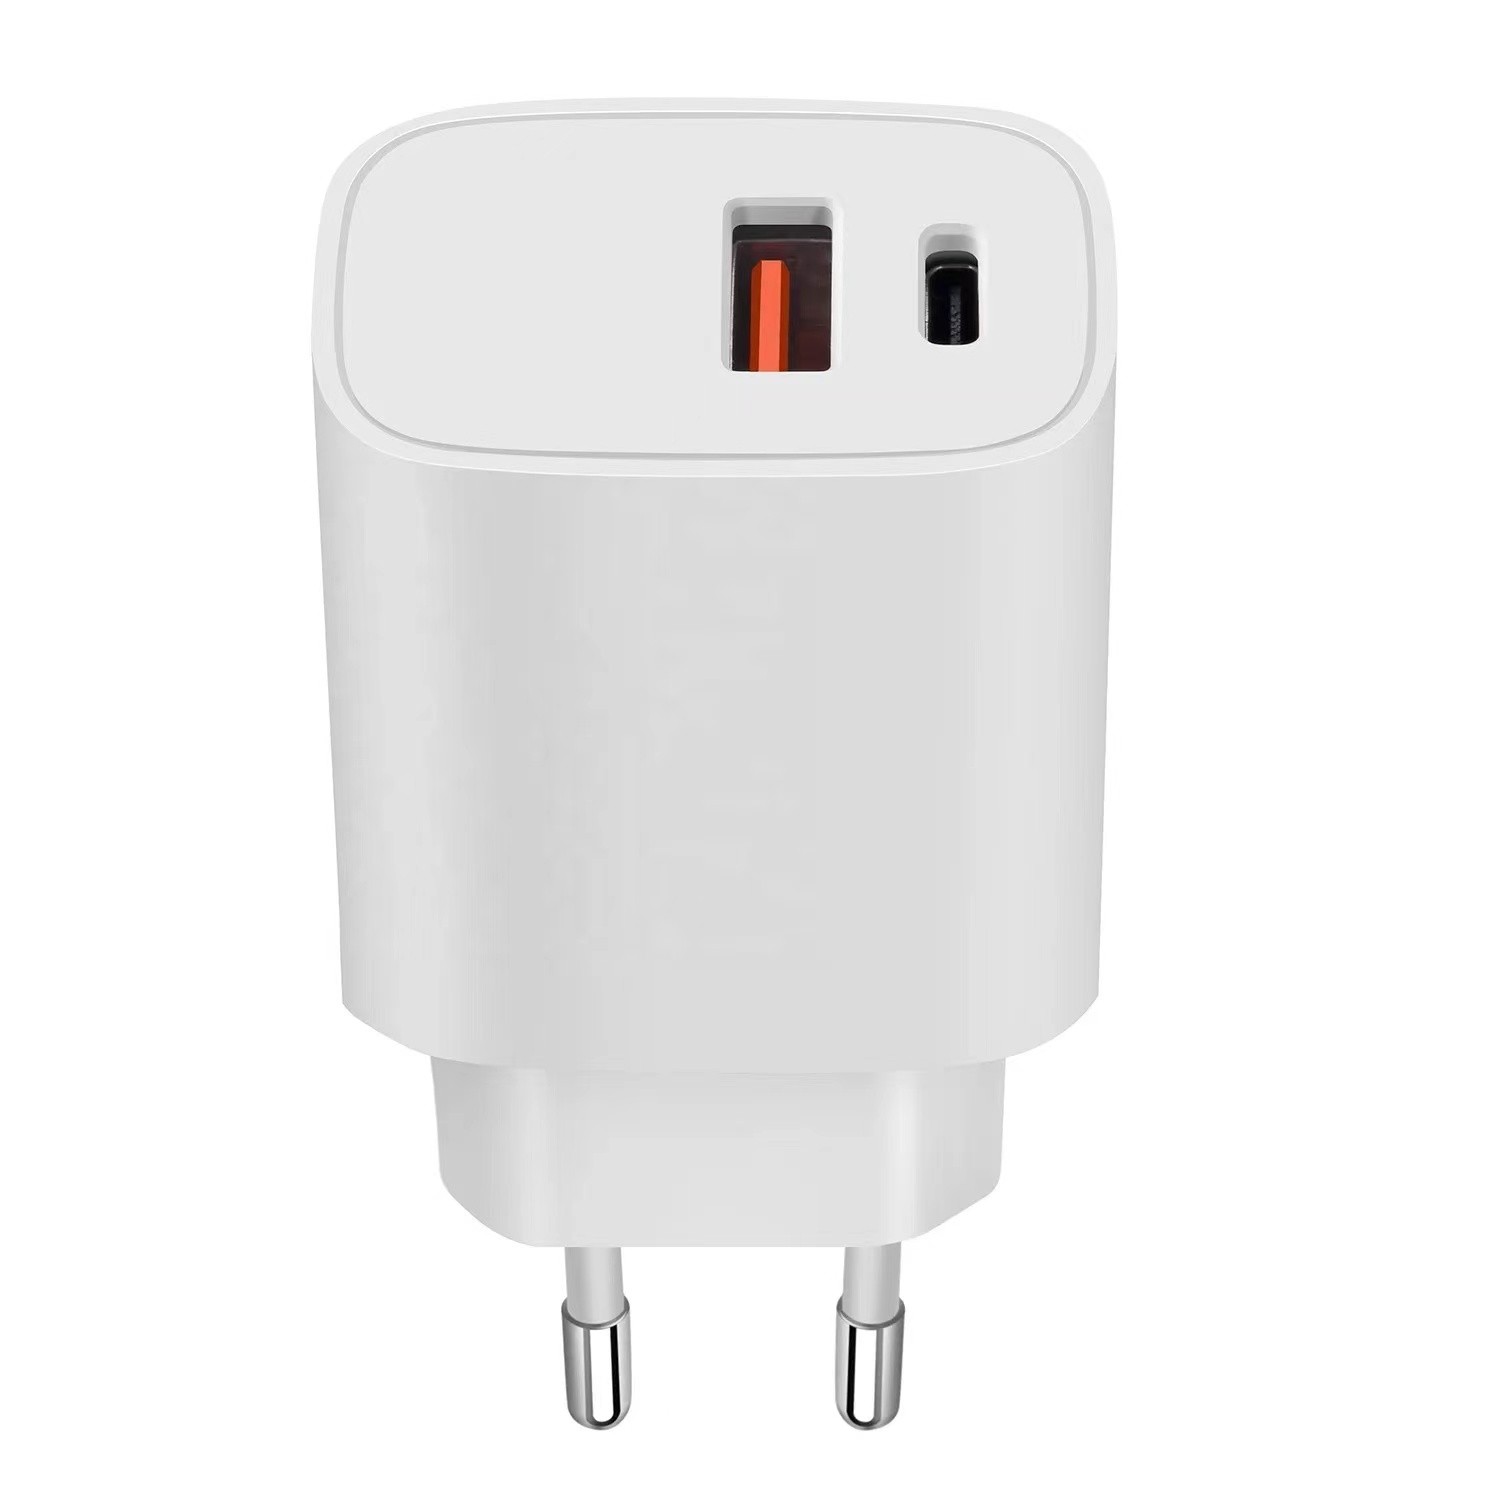 Youjia dual-port power wall plug usb charger